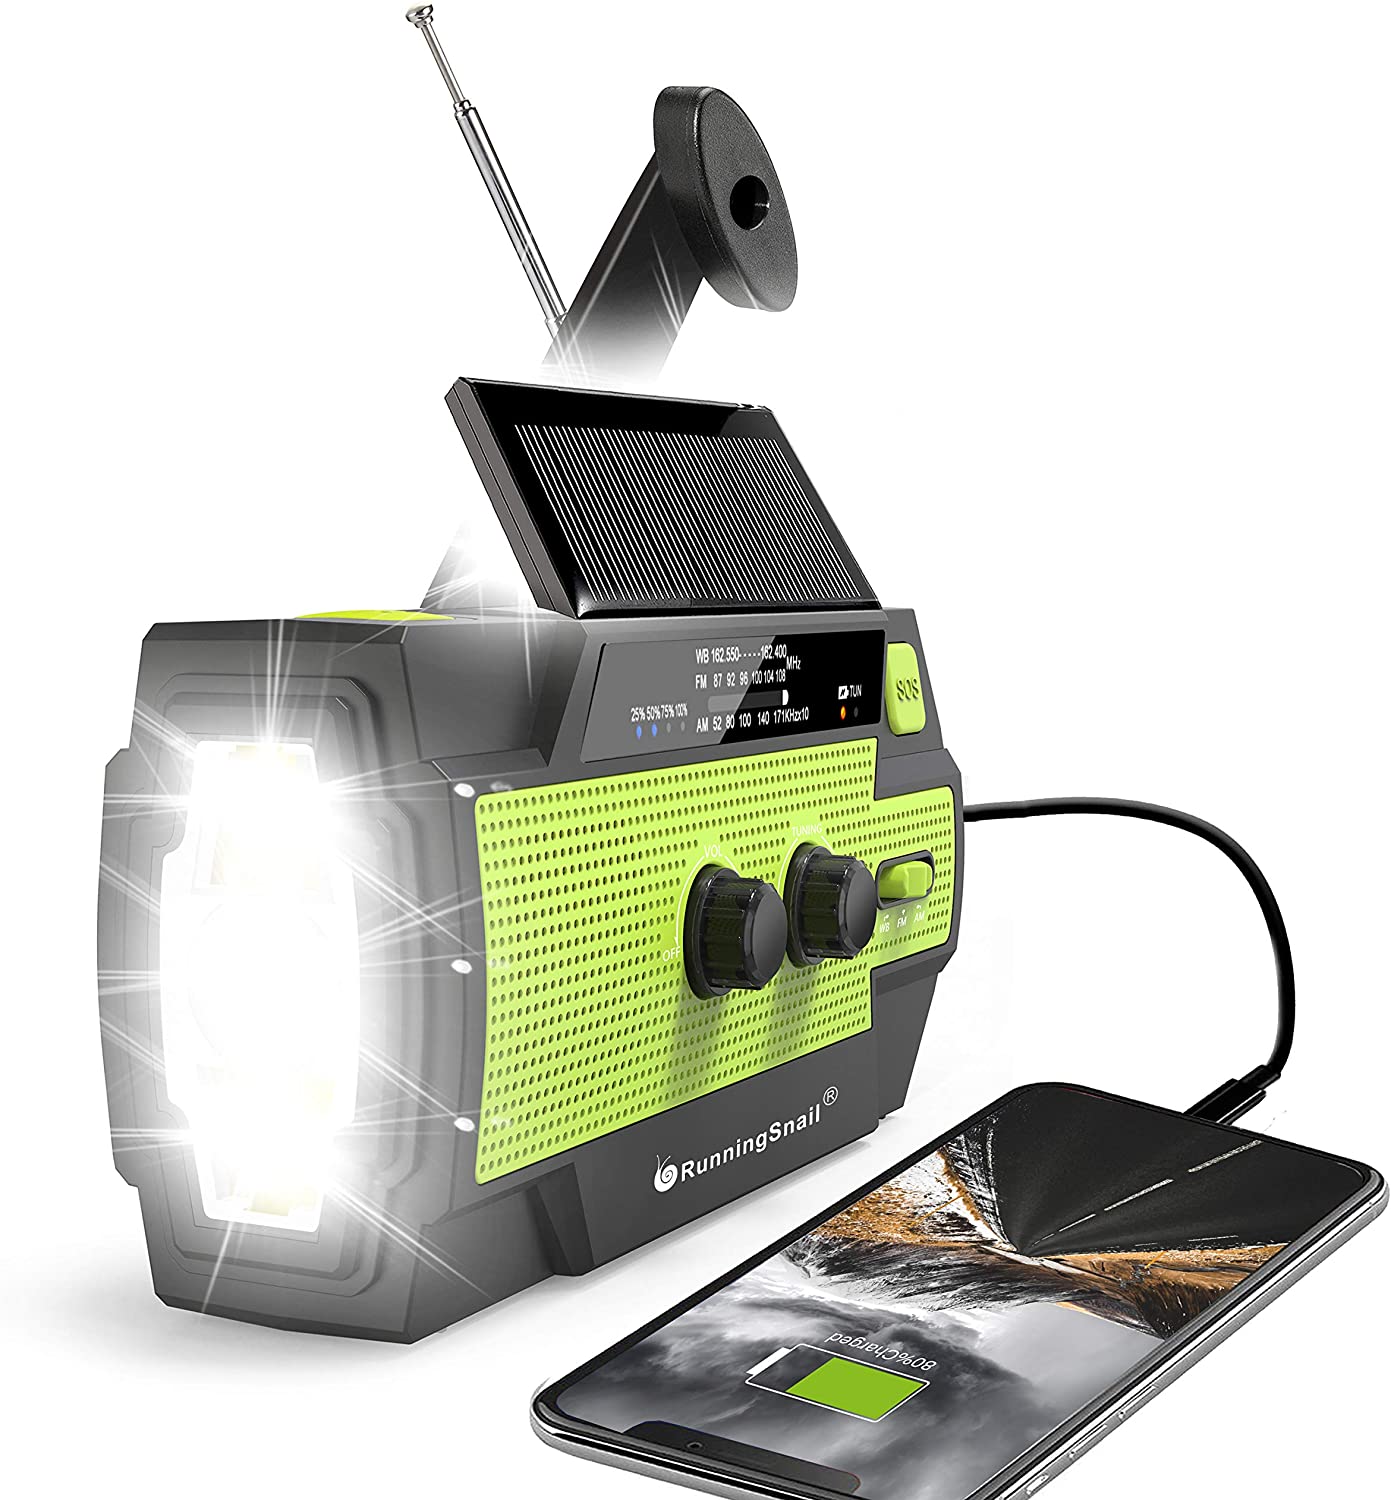 SOS Alarm LED Flashlight SUNRI 4000mAh Weather Radio Portable with Solar Charger for Cell Phone Compass Emergency Radio Hand Crank Radio AM/FM/NOAA 